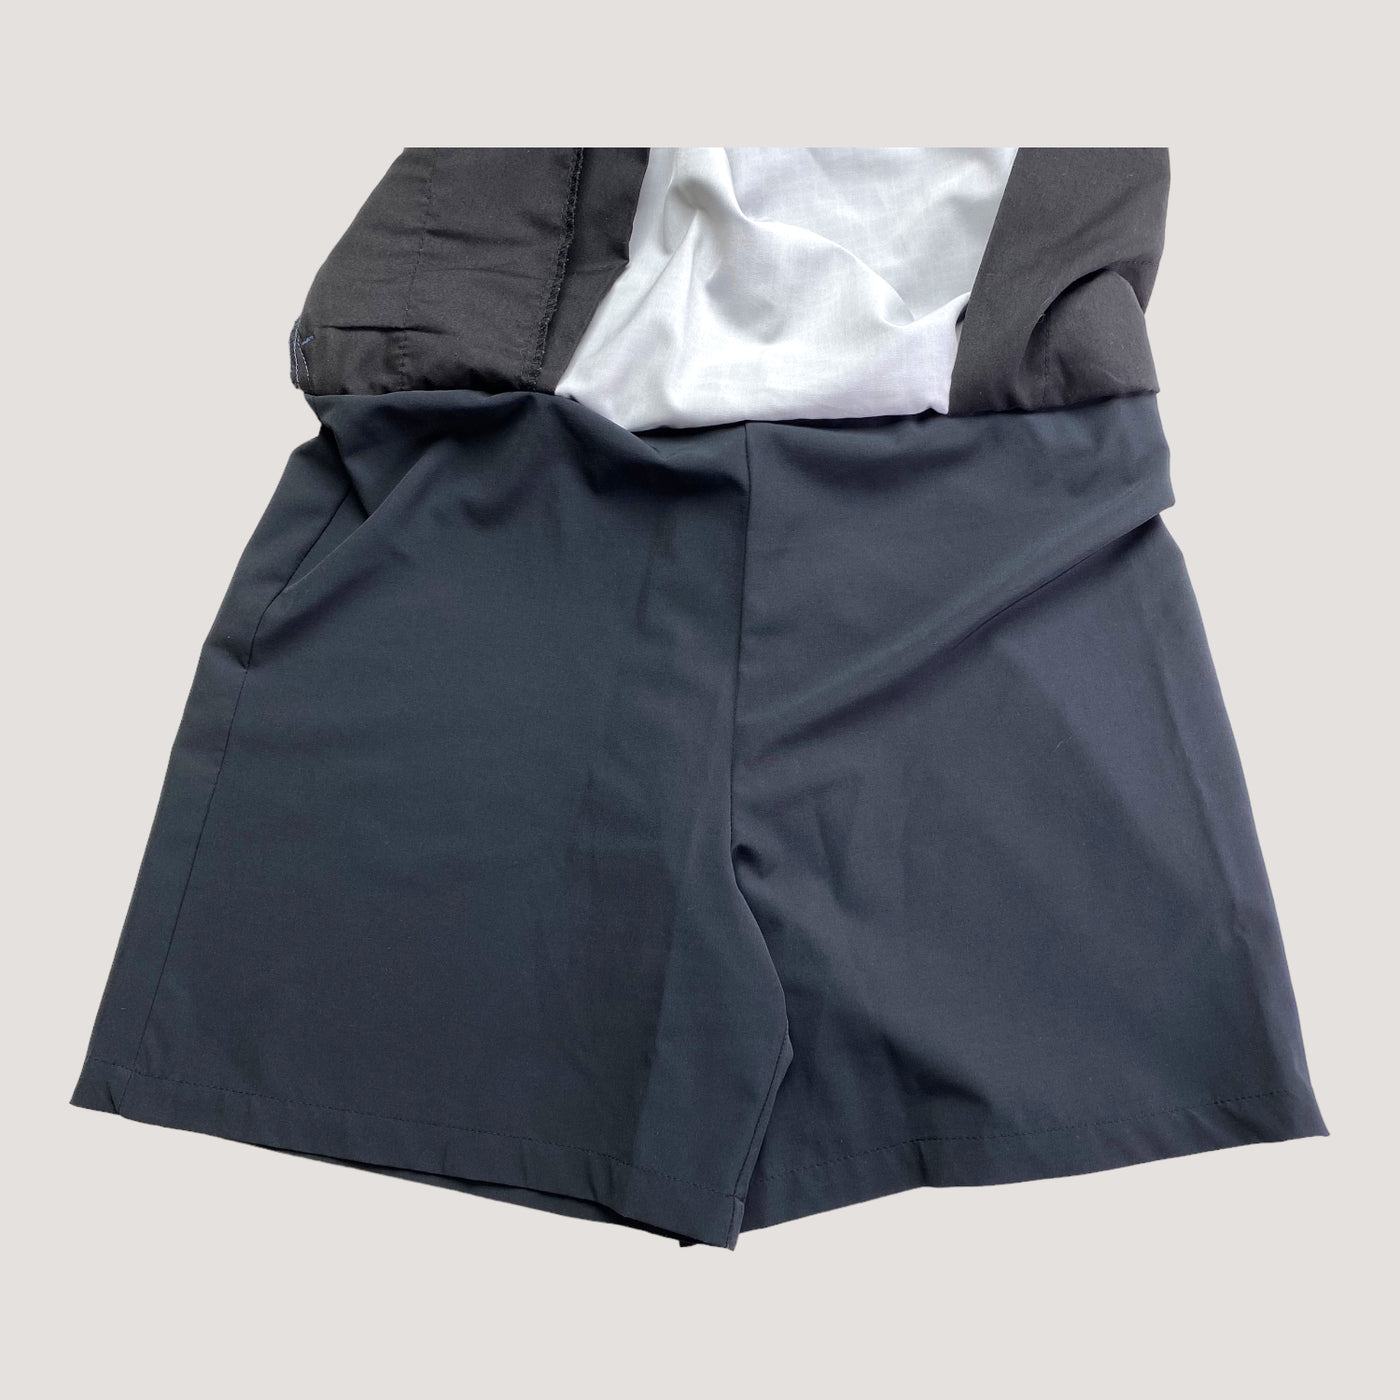 Halti sports skirt/shorts, charcoal | woman 38